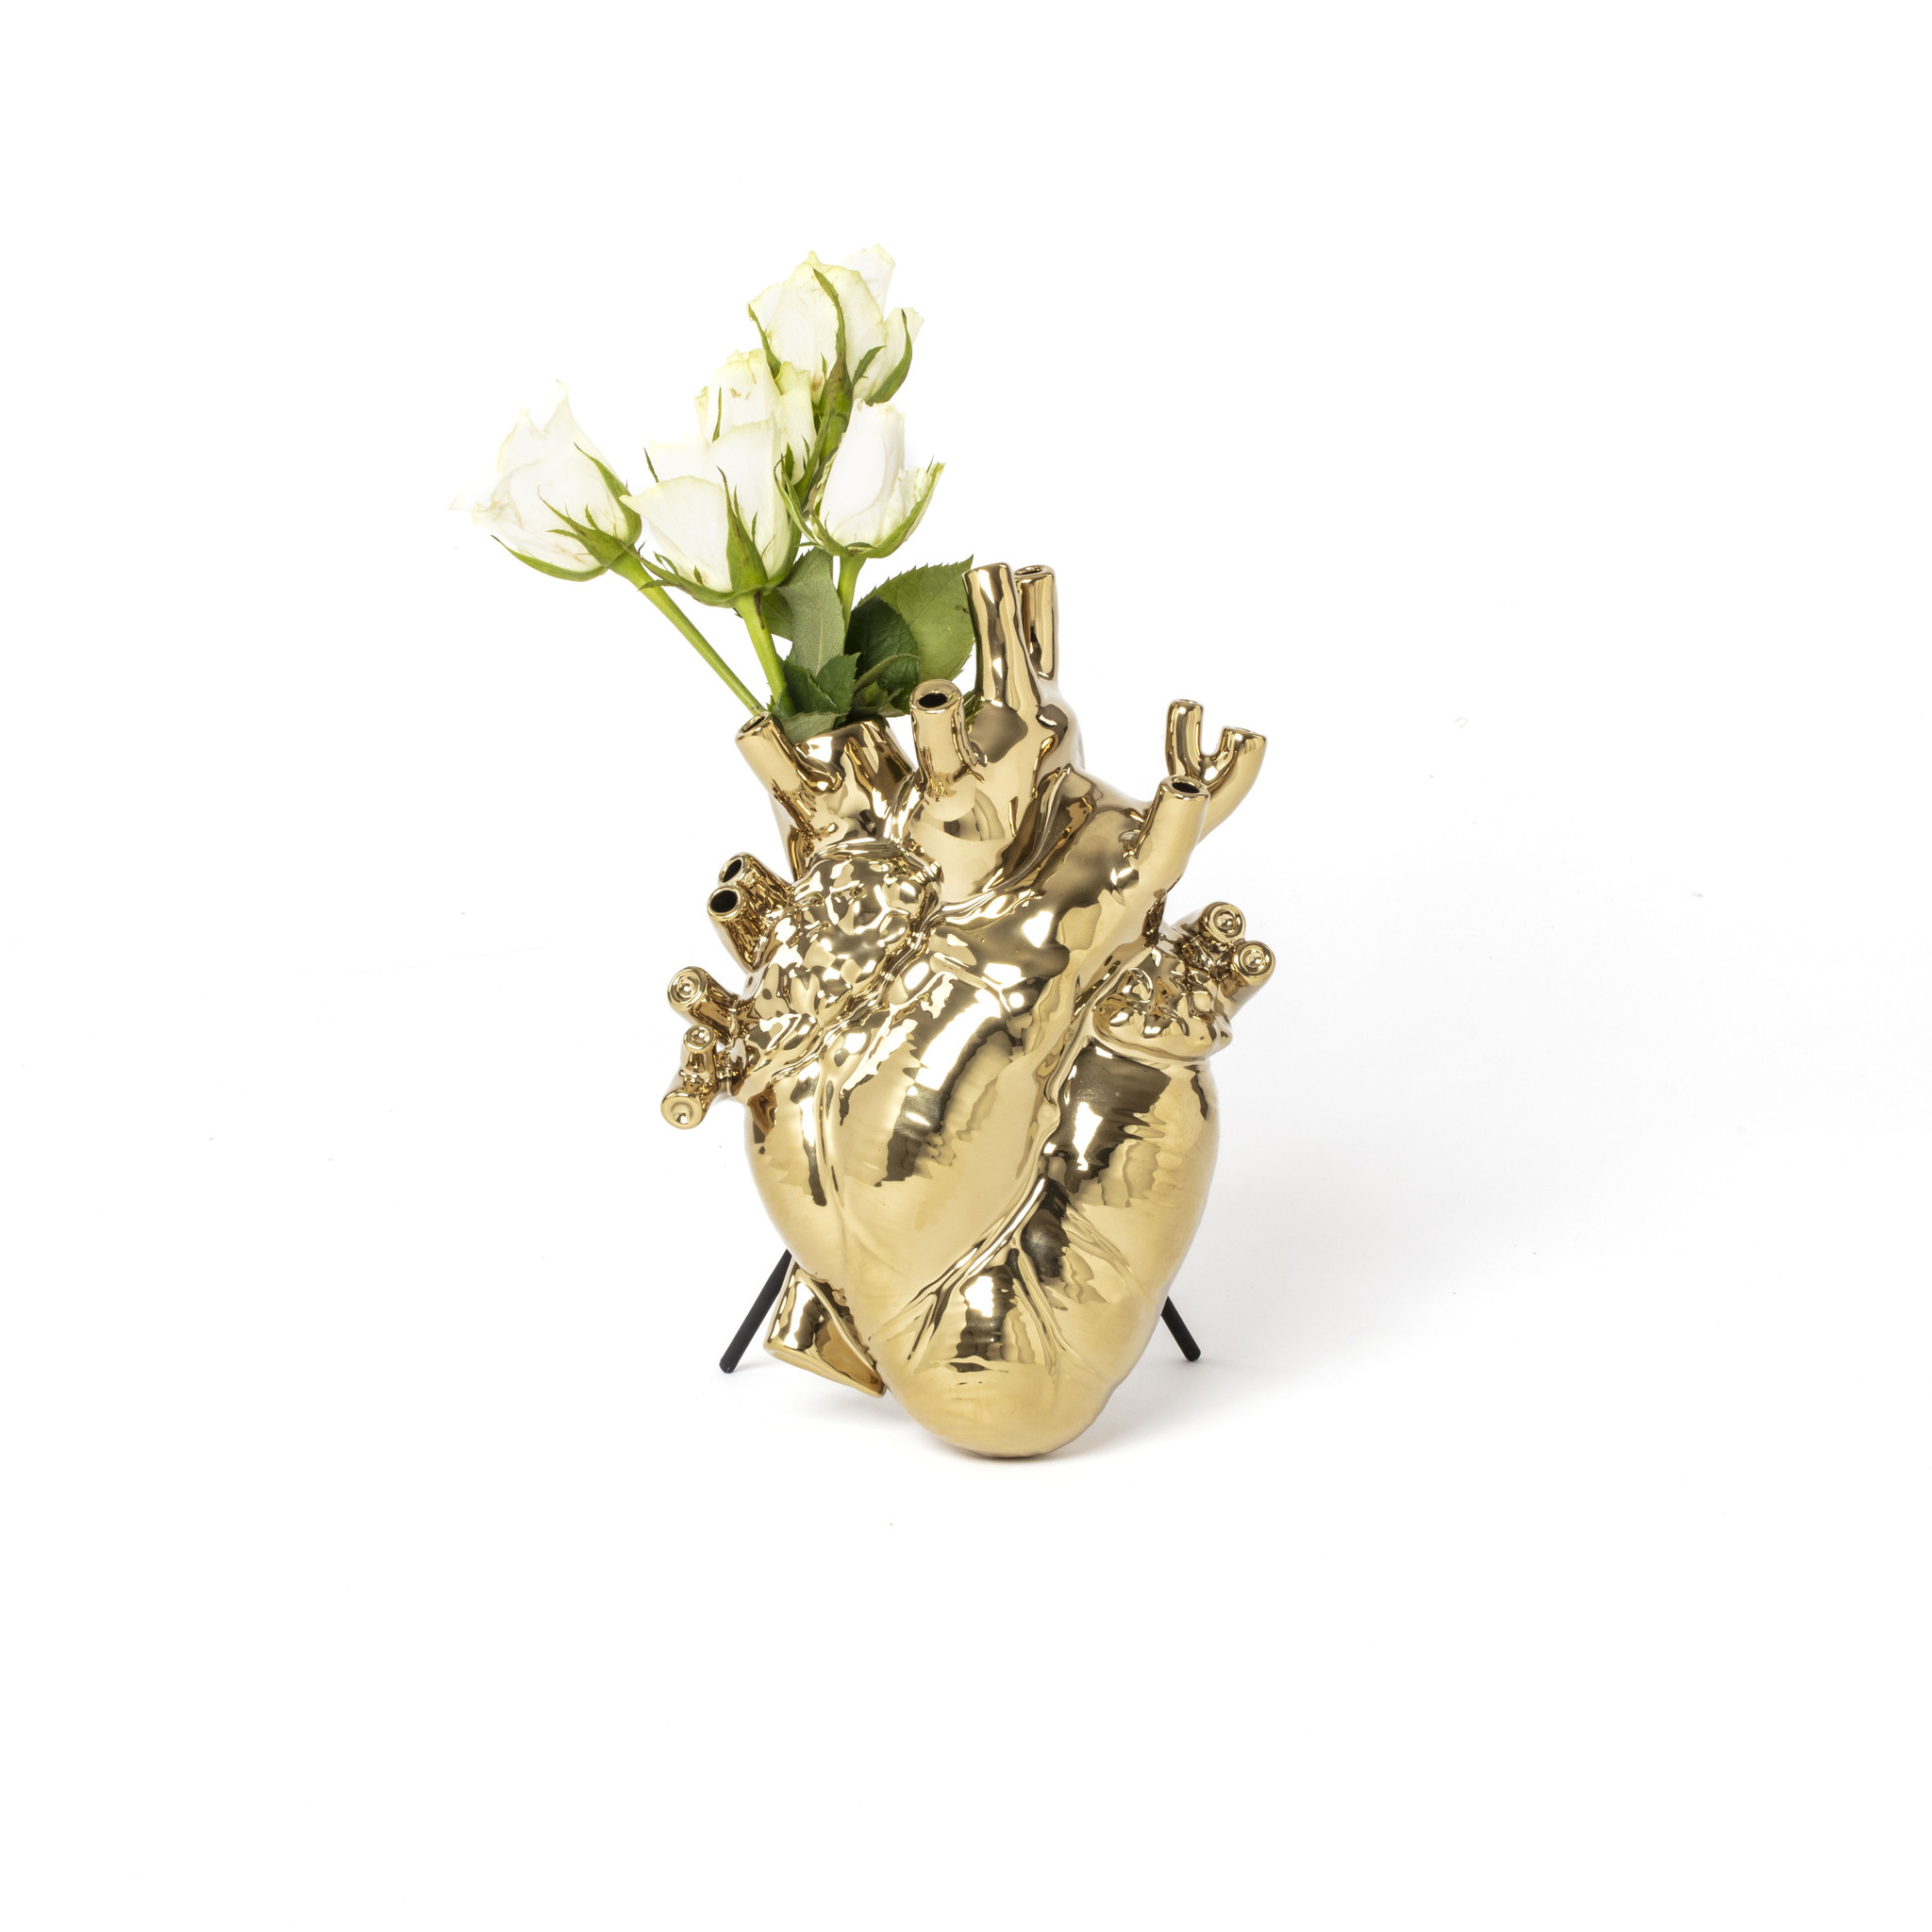 Seletti Heart Shaped Vase Gold "Love in Bloom"